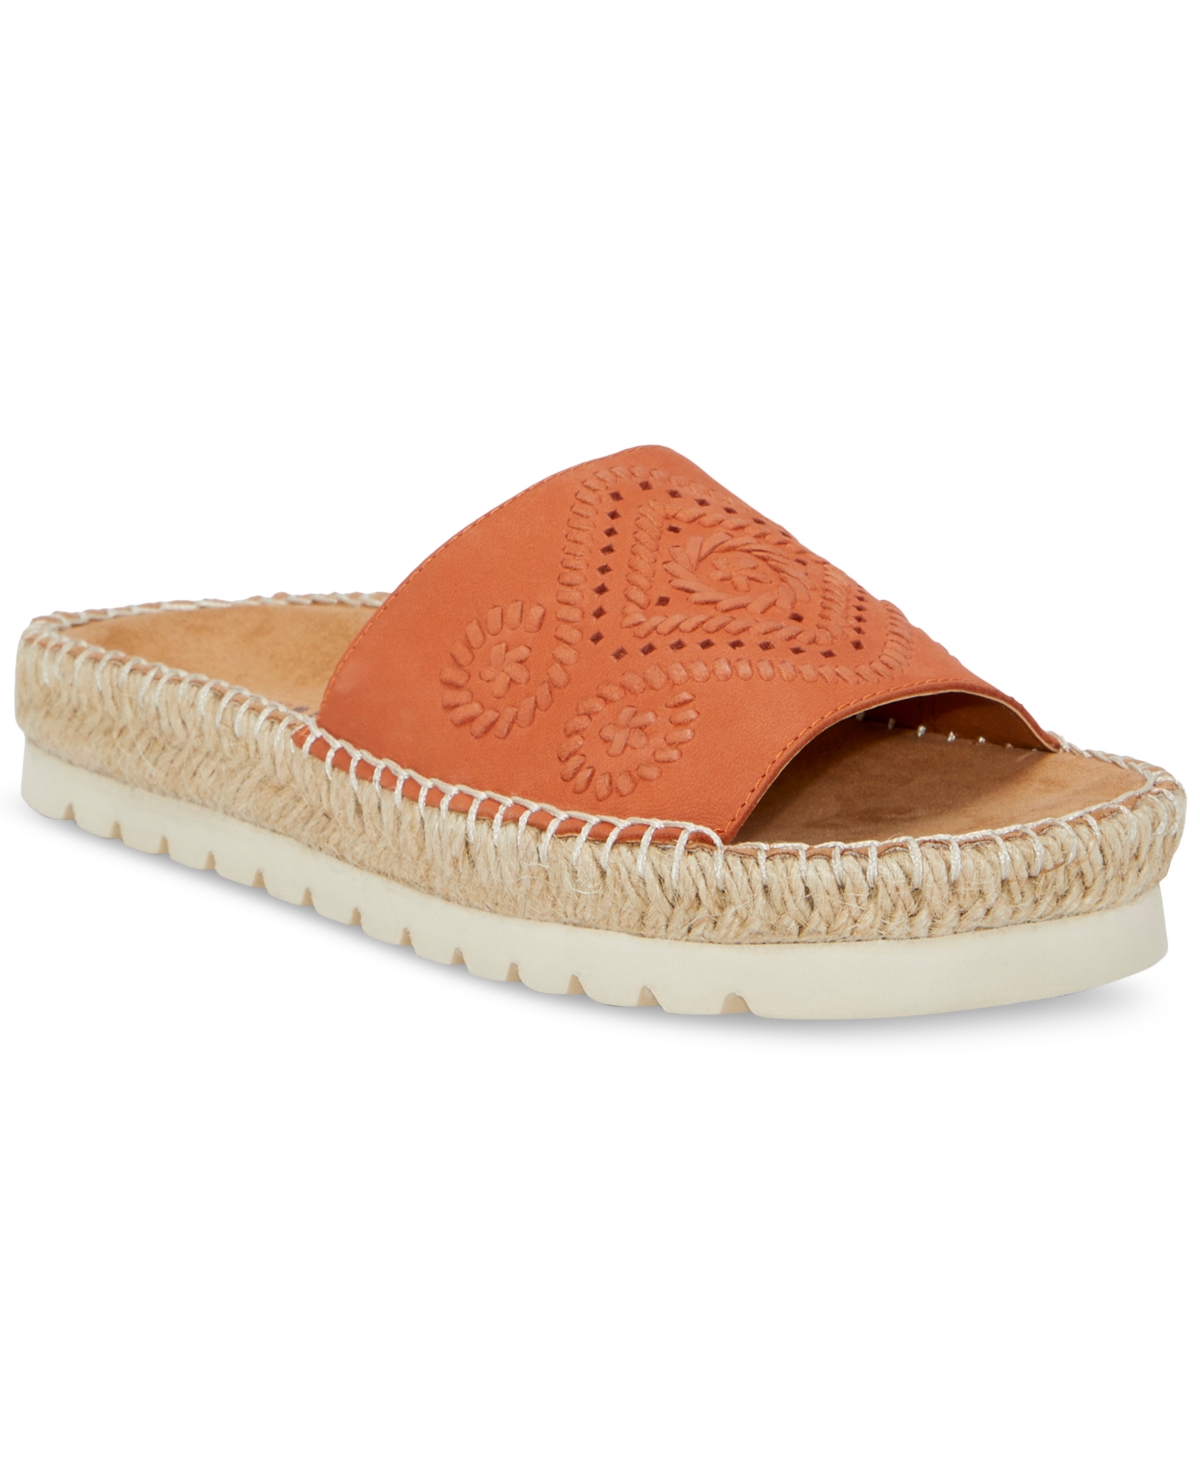 Women's Lemana Espadrille Flat Slide Sandals - Brick Orange Leather